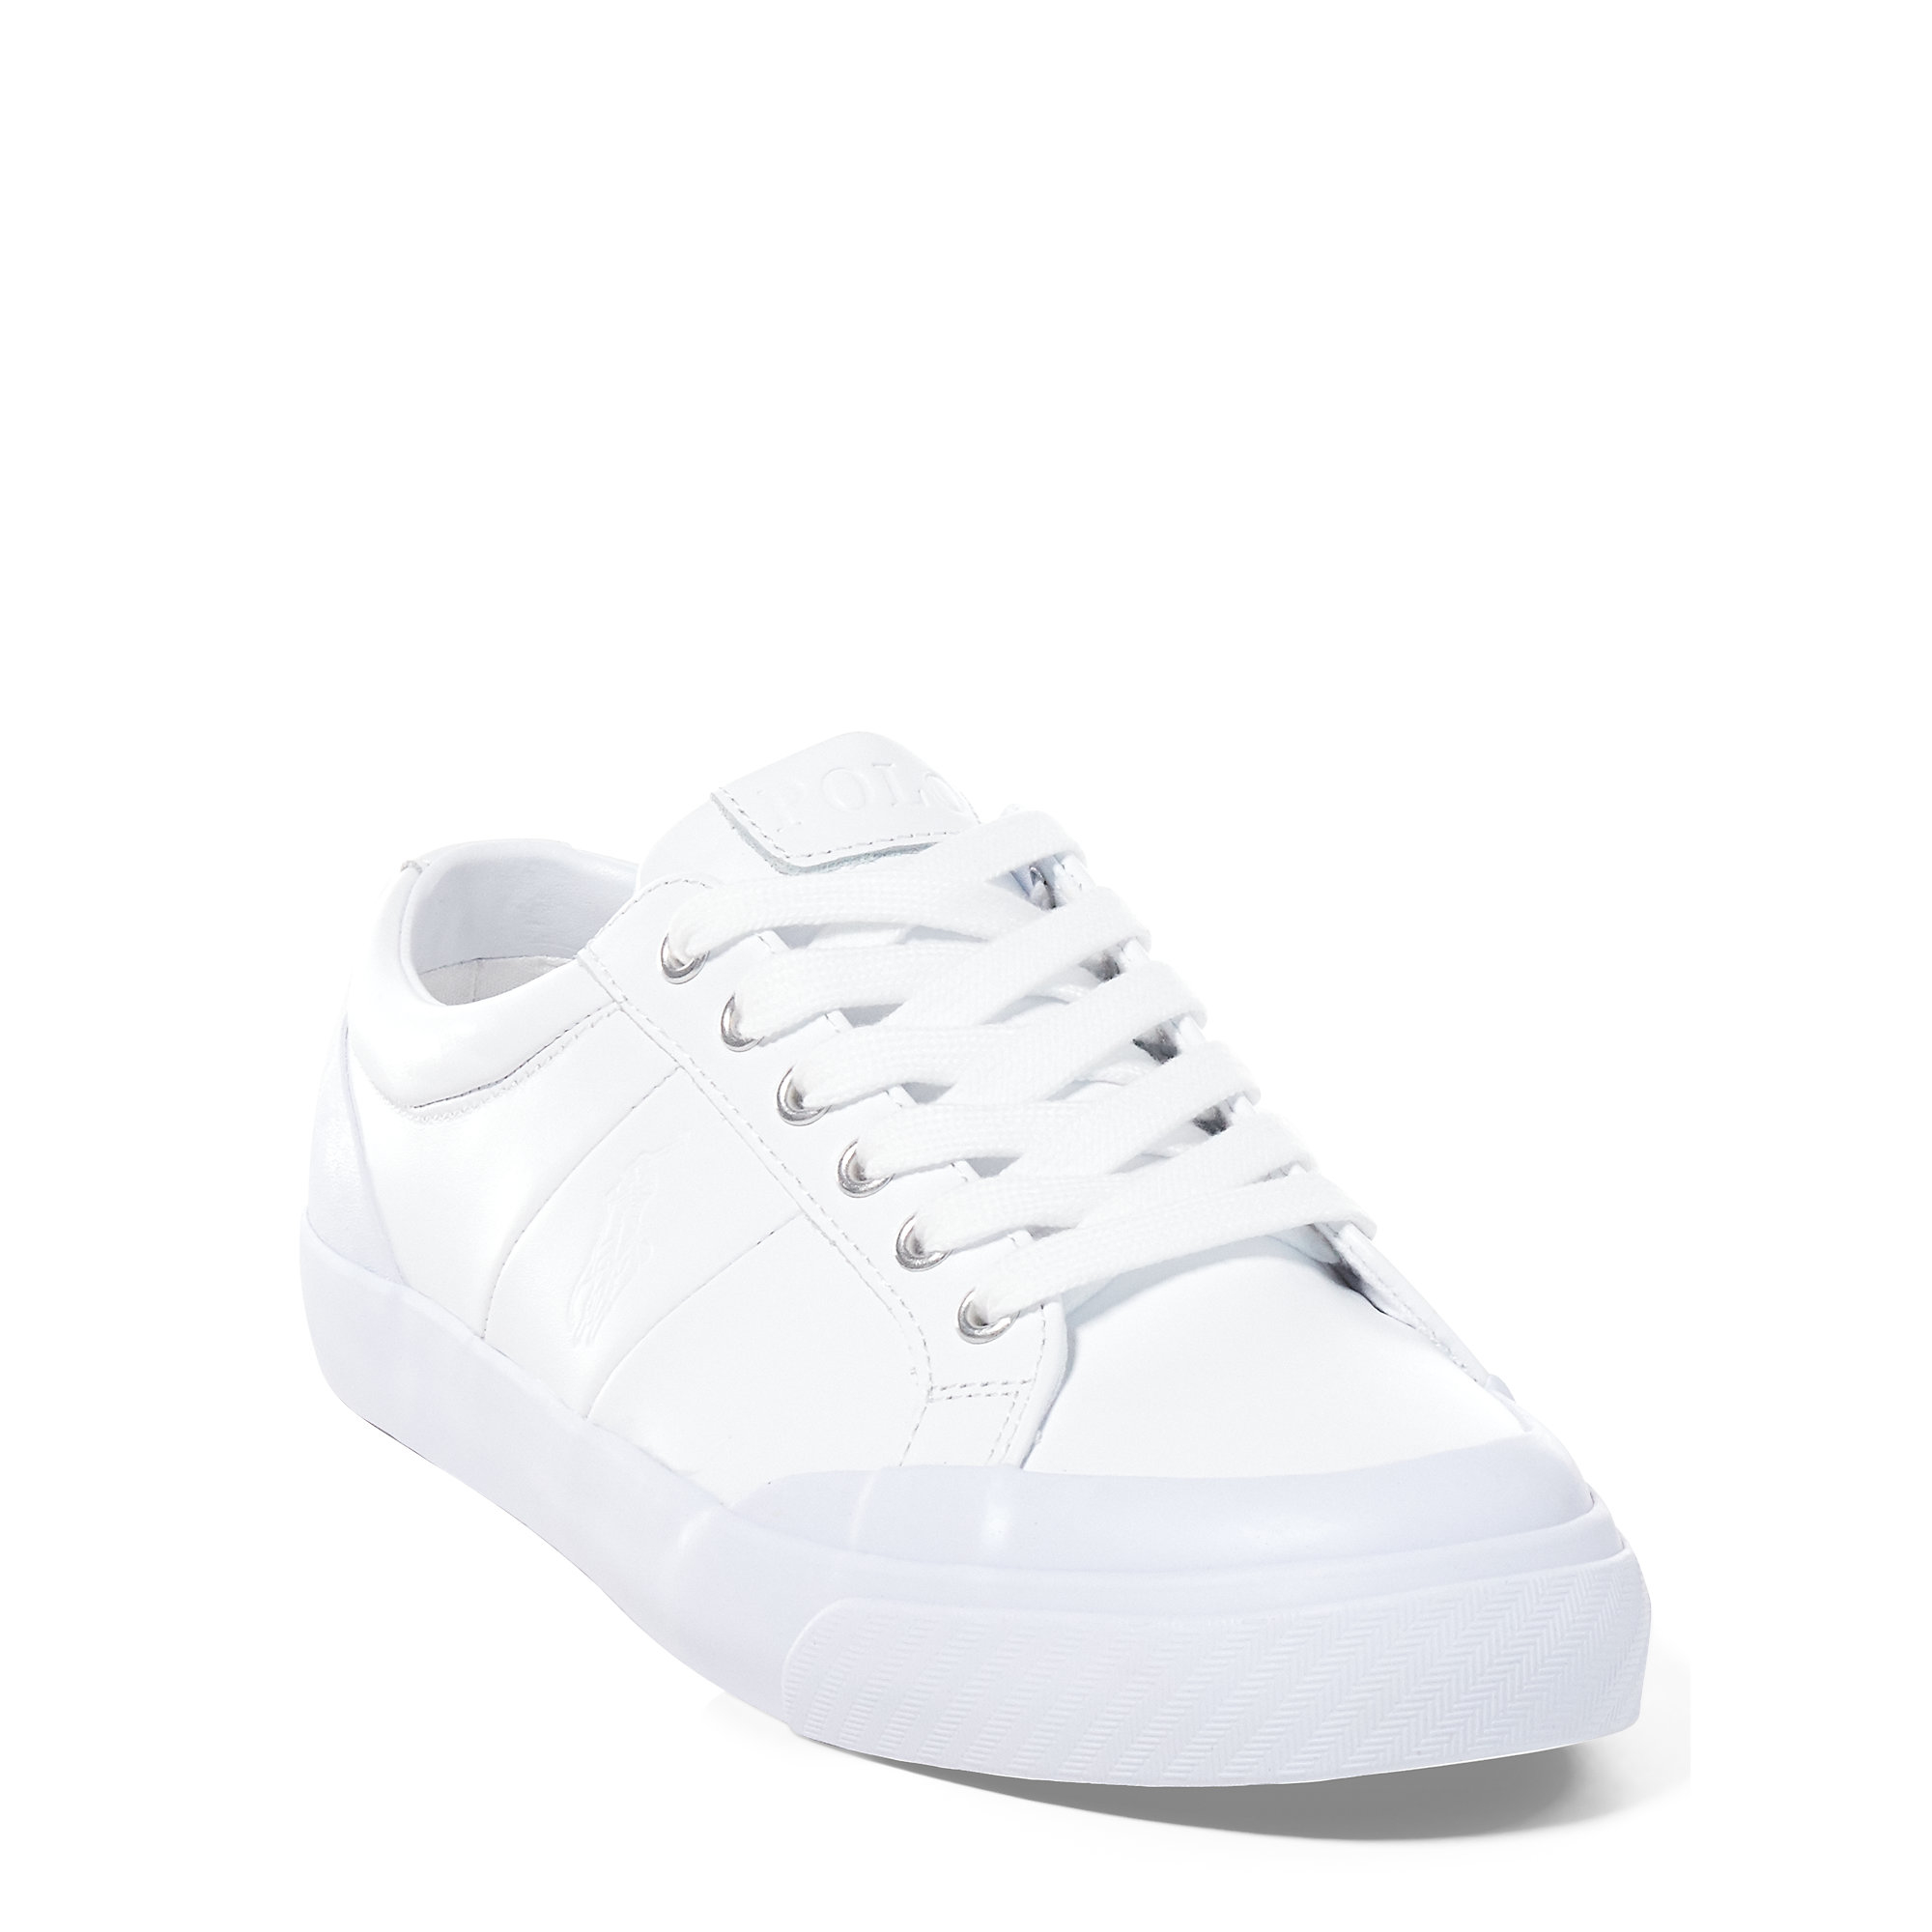 Lyst - Polo Ralph Lauren Ian Nappa Leather Sneaker in White for Men